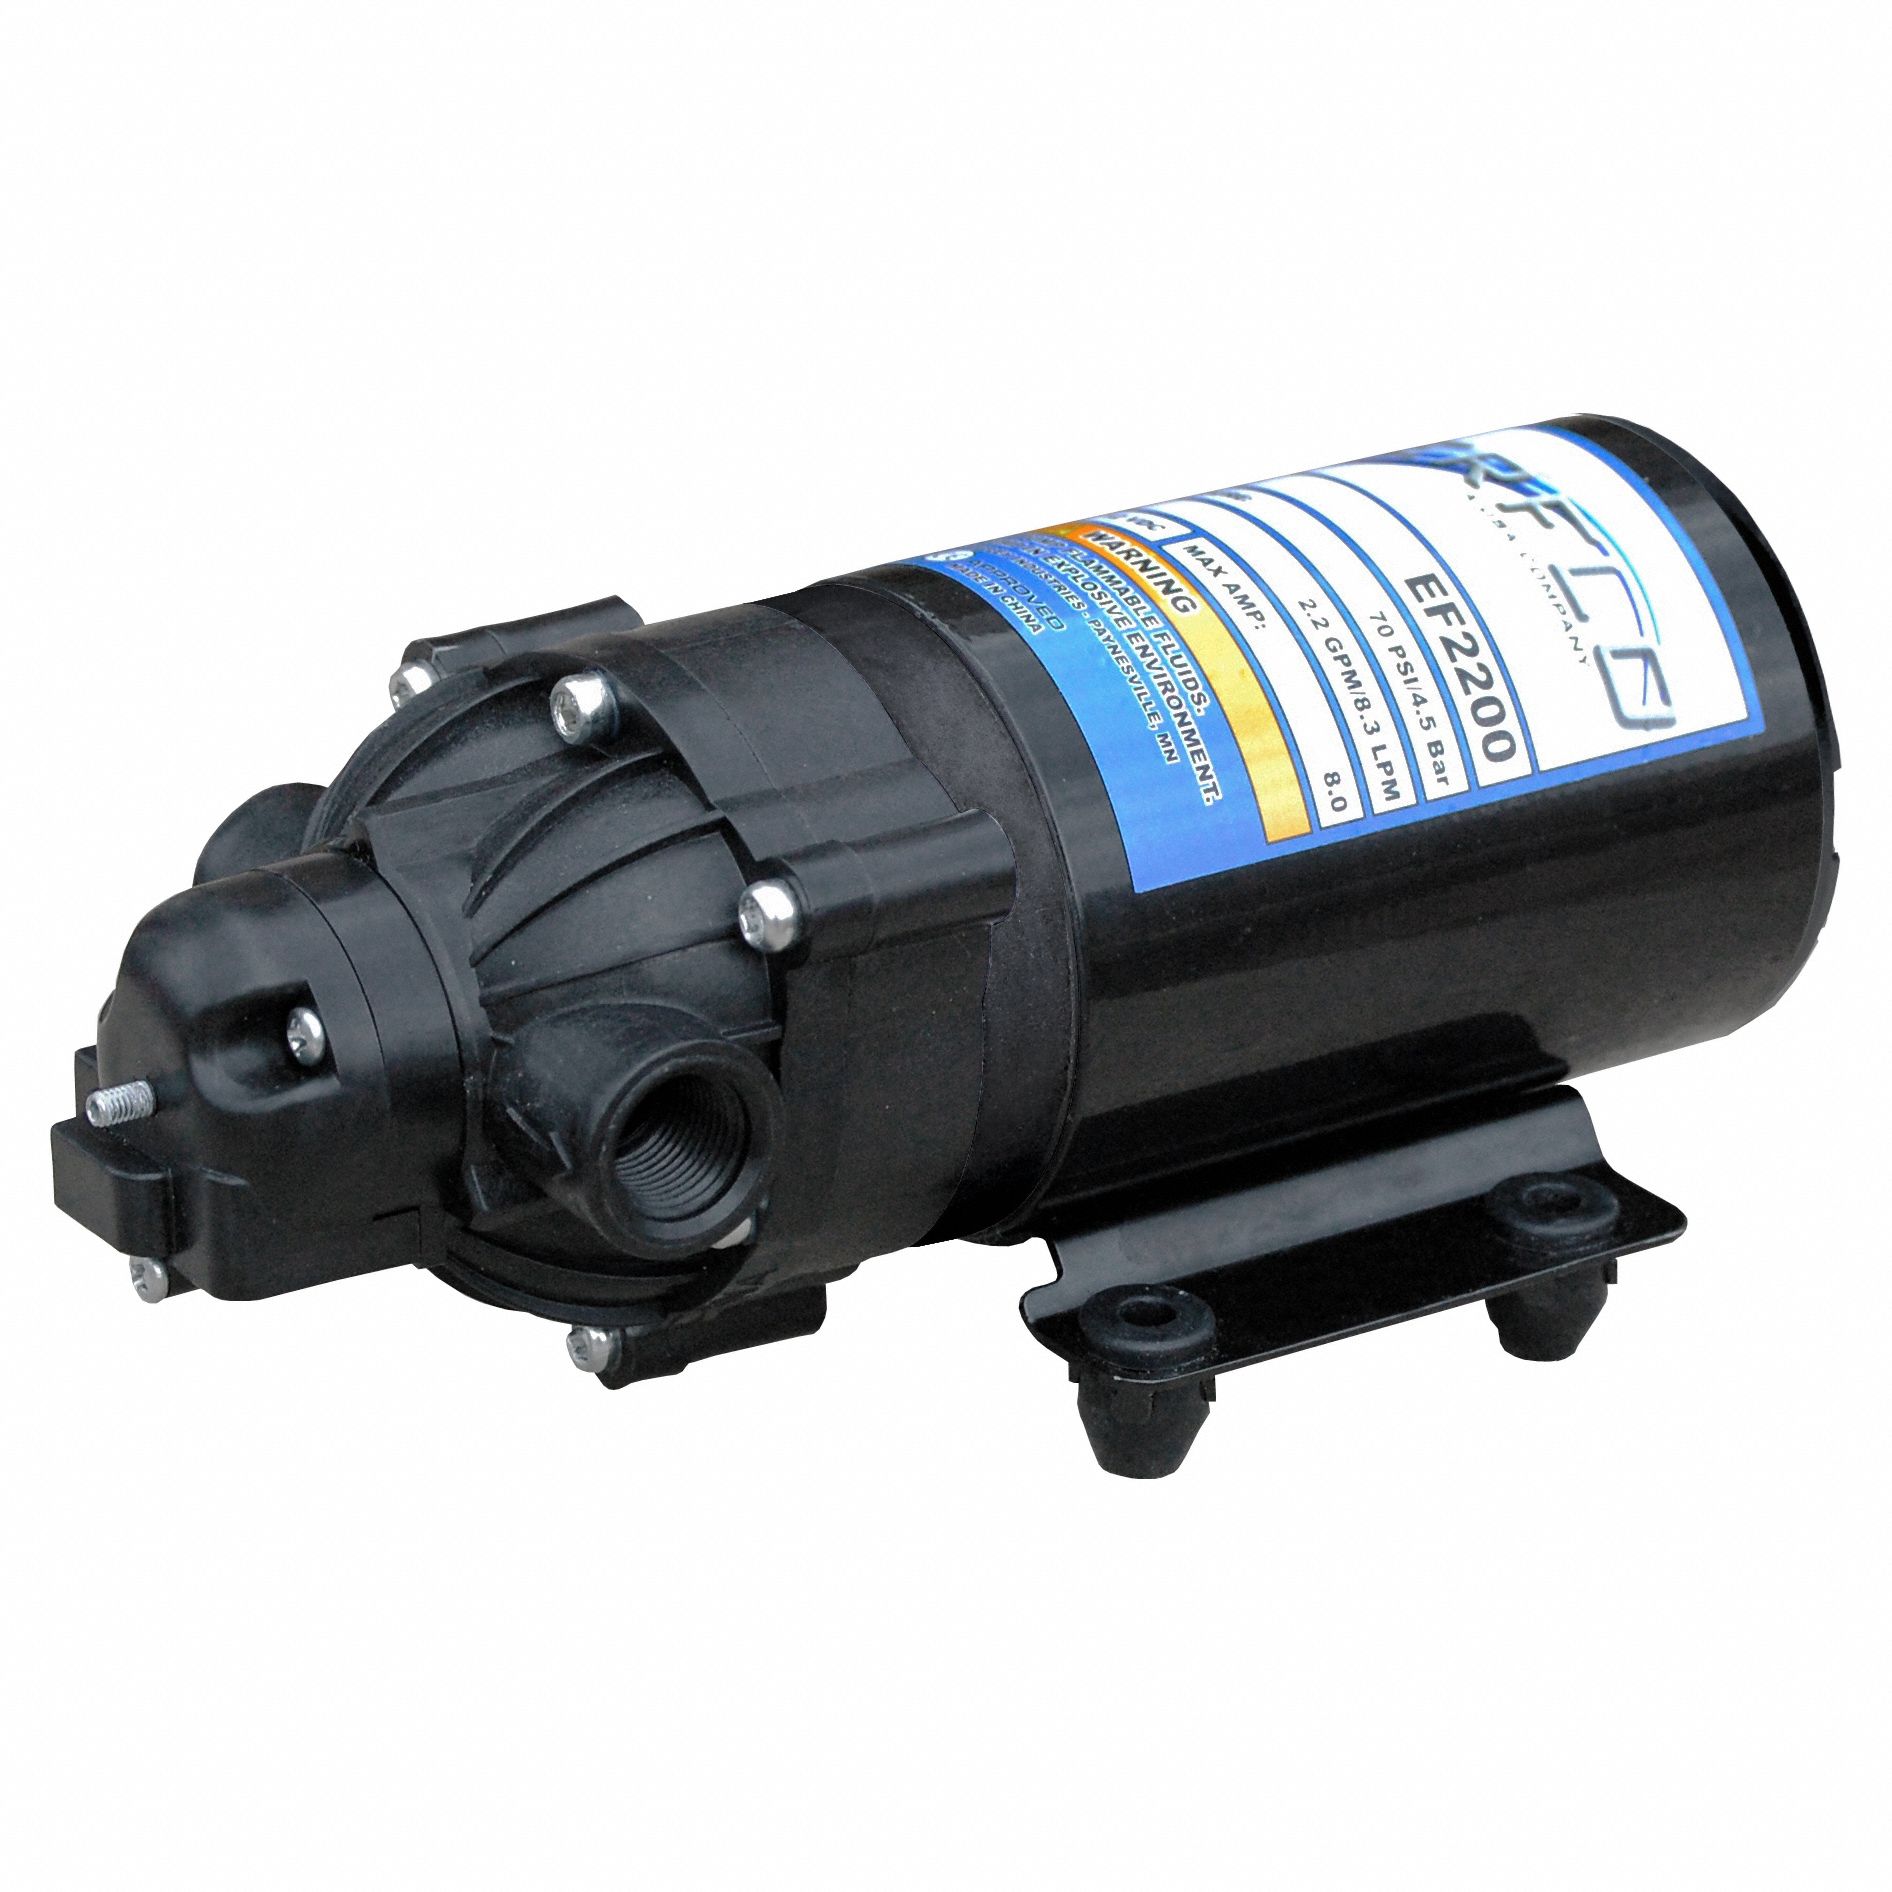 Electric Sprayer Pump: 3/8 in FNPT, 12V DC, 2.2 gpm Max. Flow, 70 psi Max. Pressure - Pumps